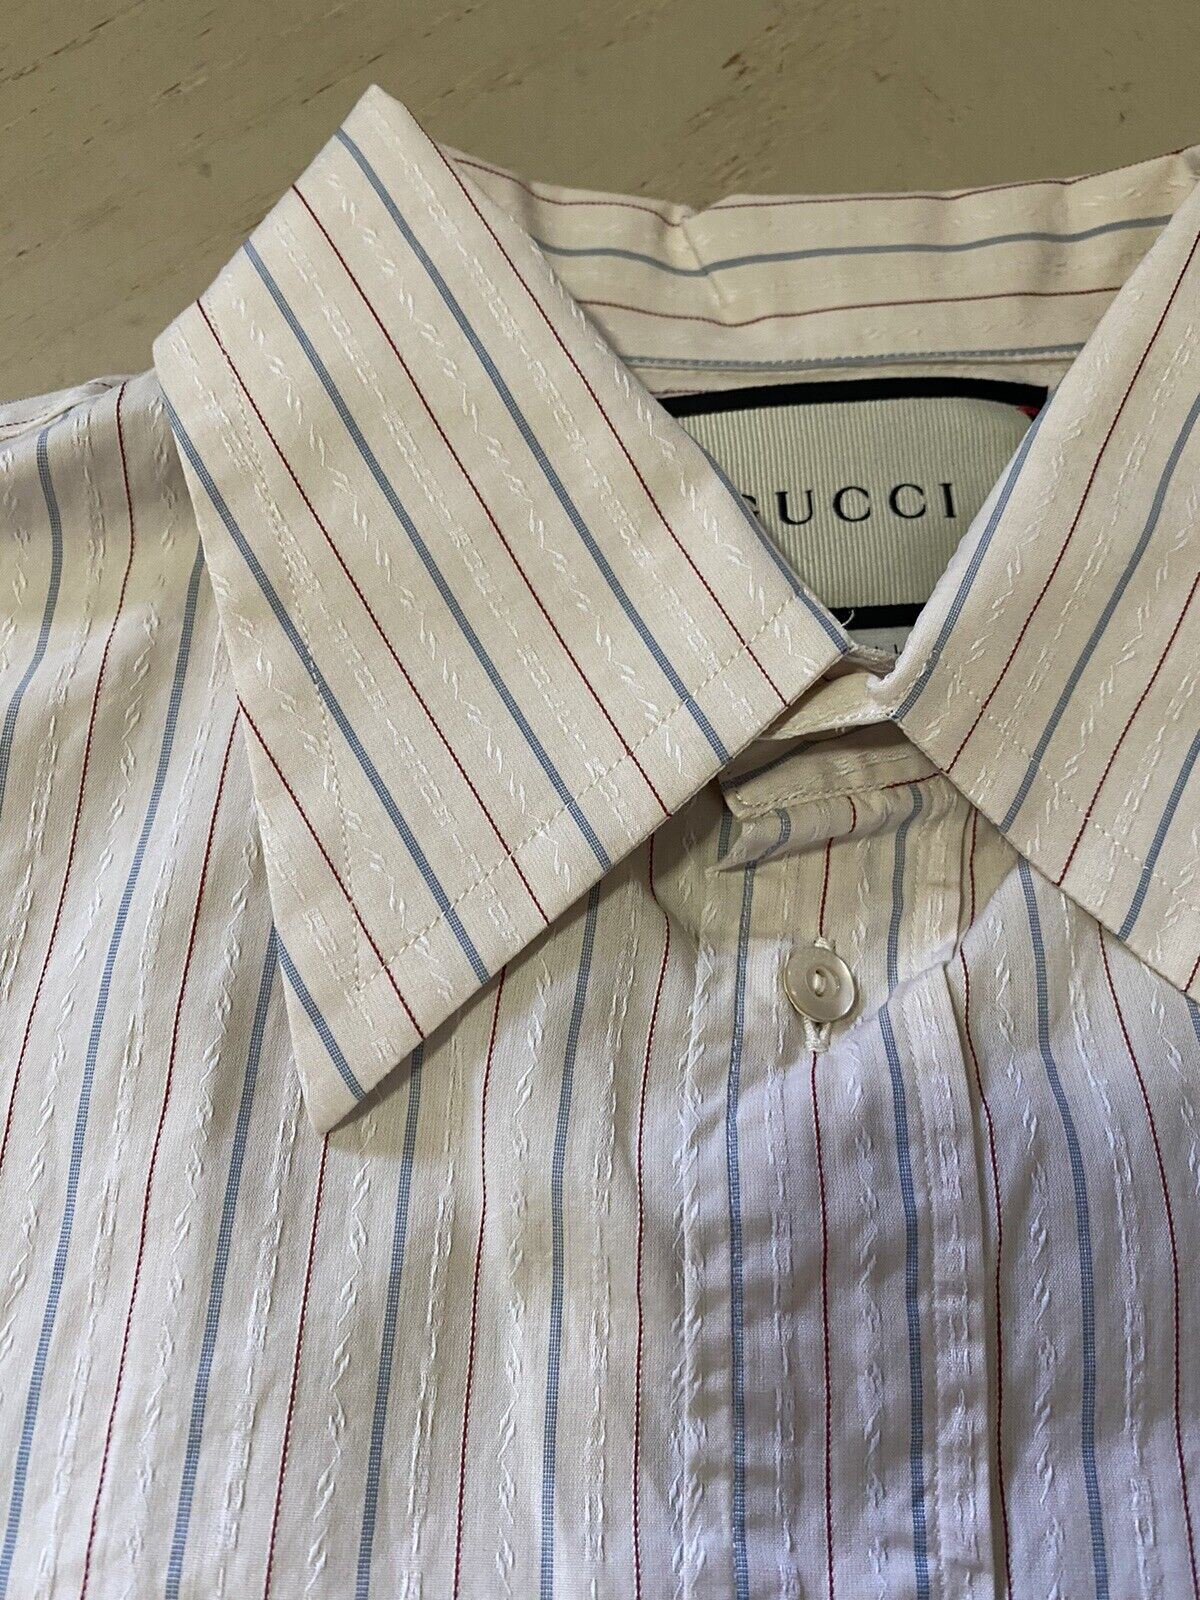 New Gucci Men’s Dress Shirt White/Multicolor 39/15.5 Italy